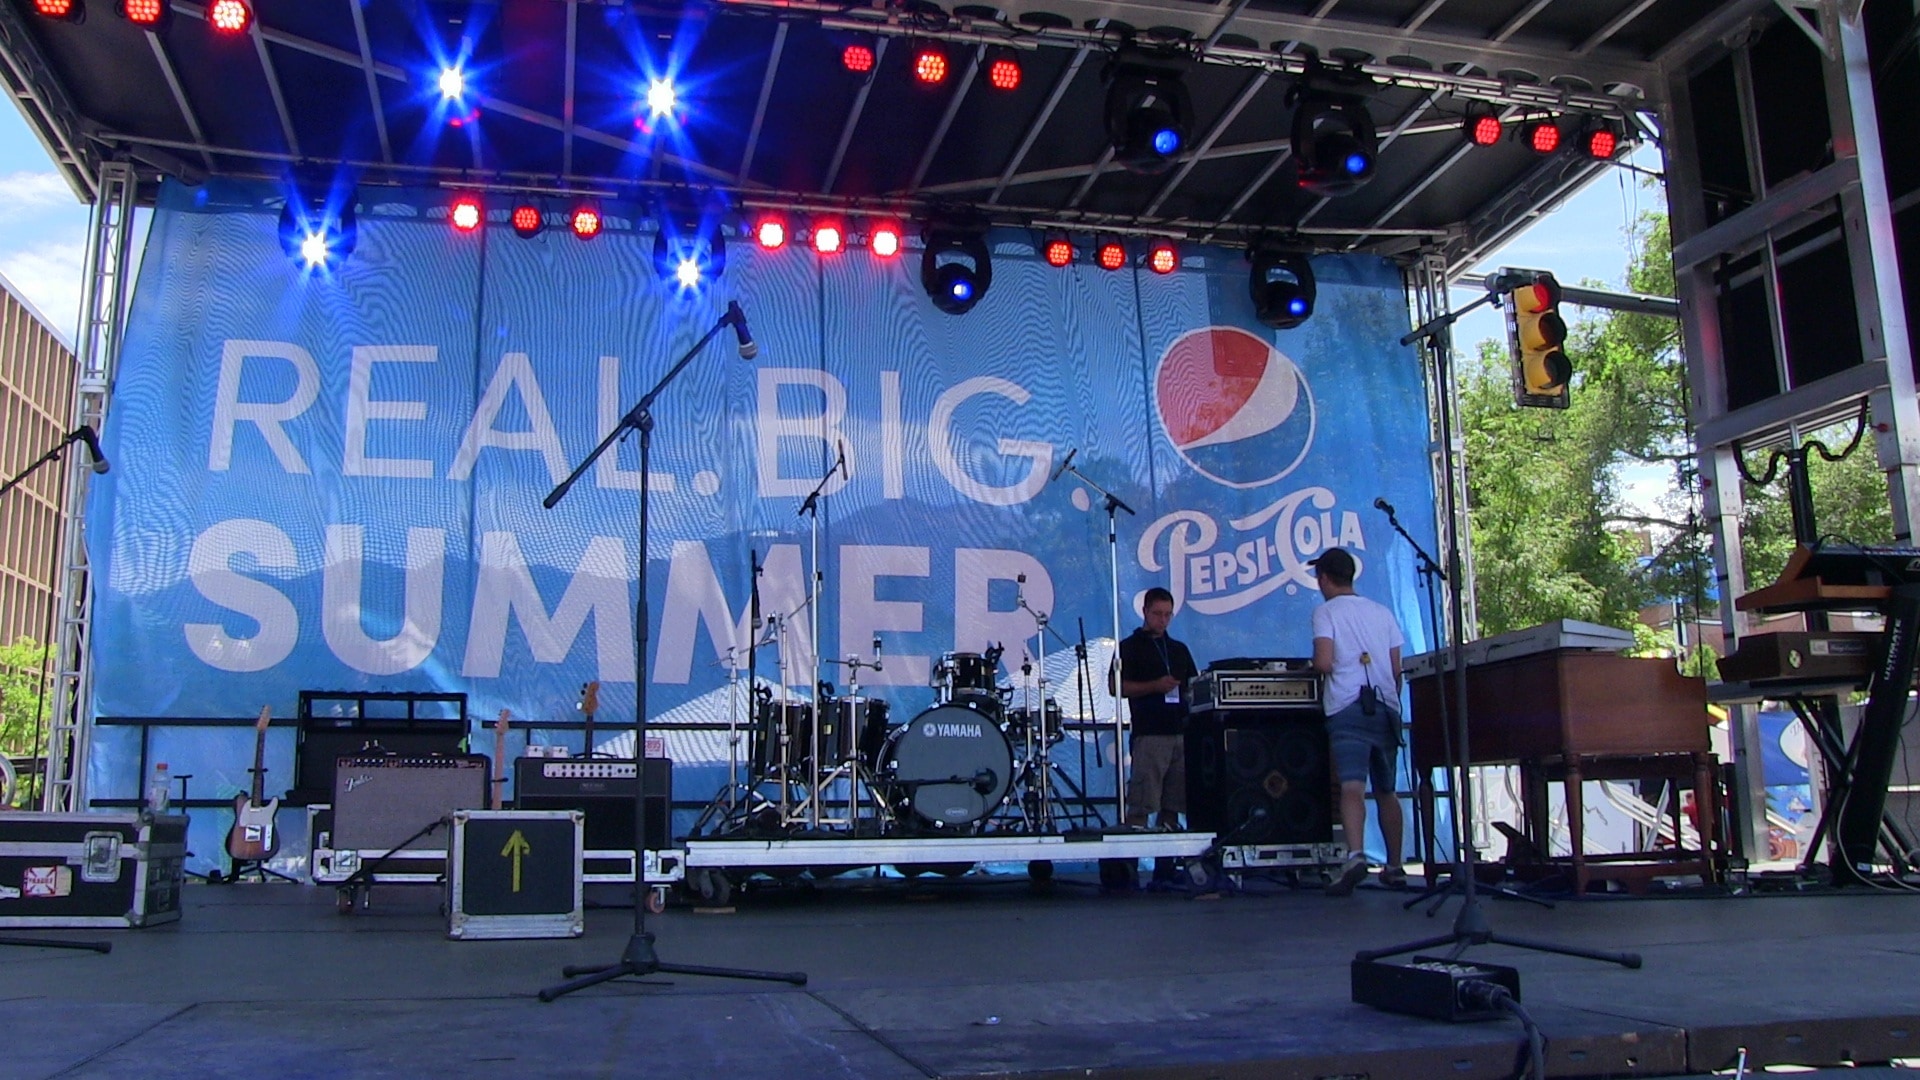 Pepsi Cola Real Big Summer tour stage